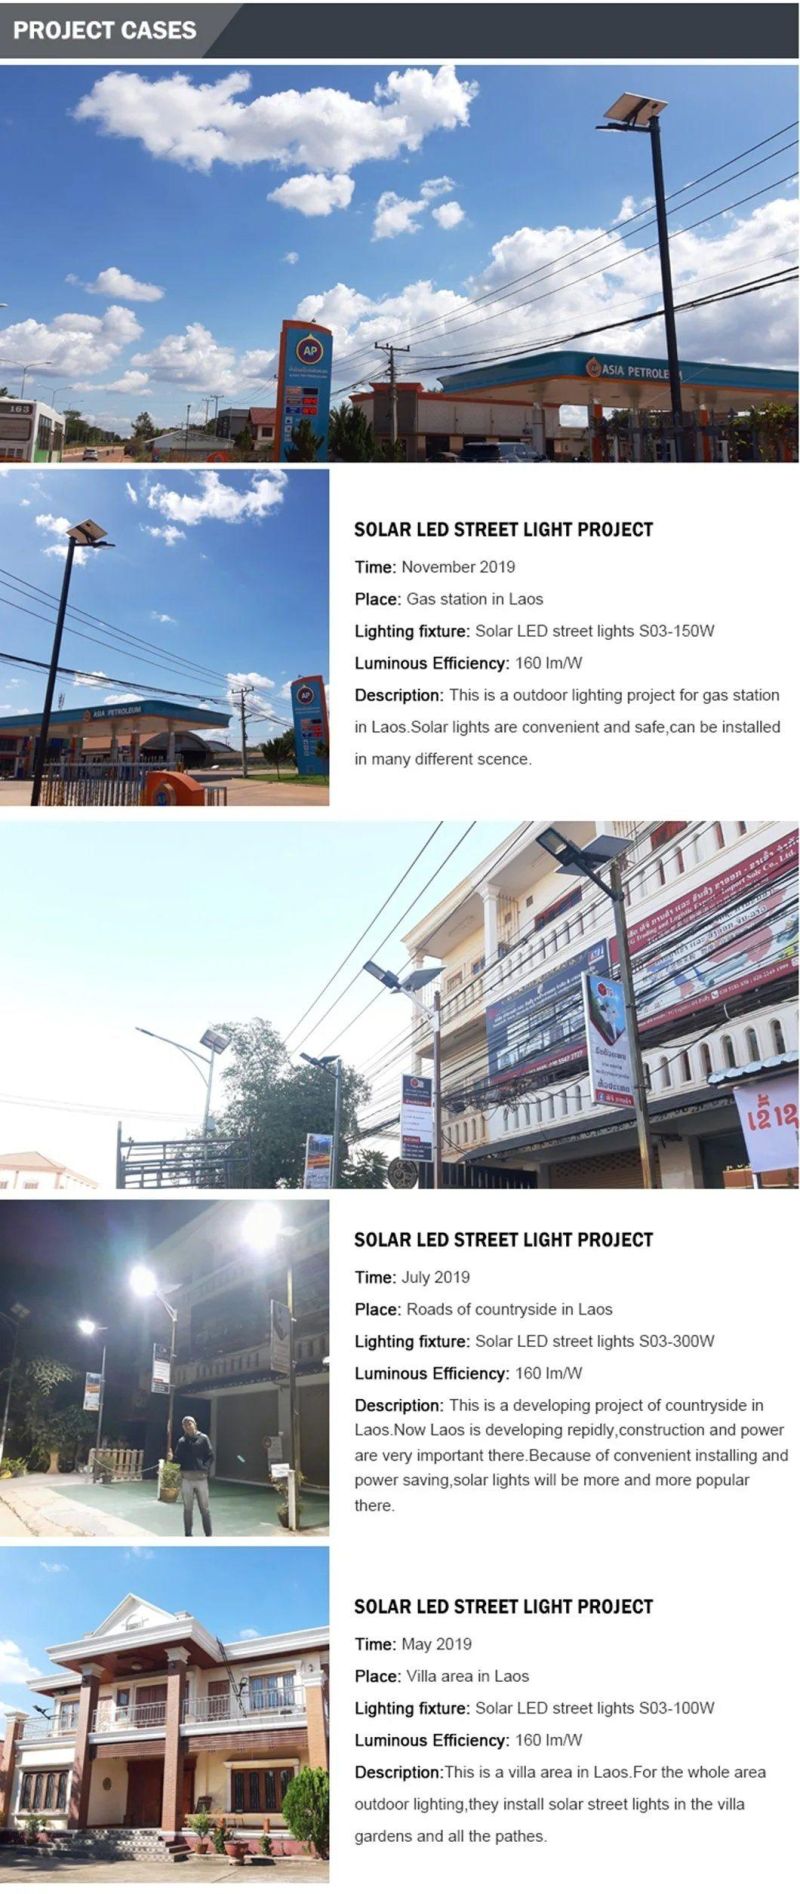 All in Two Lithium Battery Integrated LED Modules Solar Street Light Tender in Assam